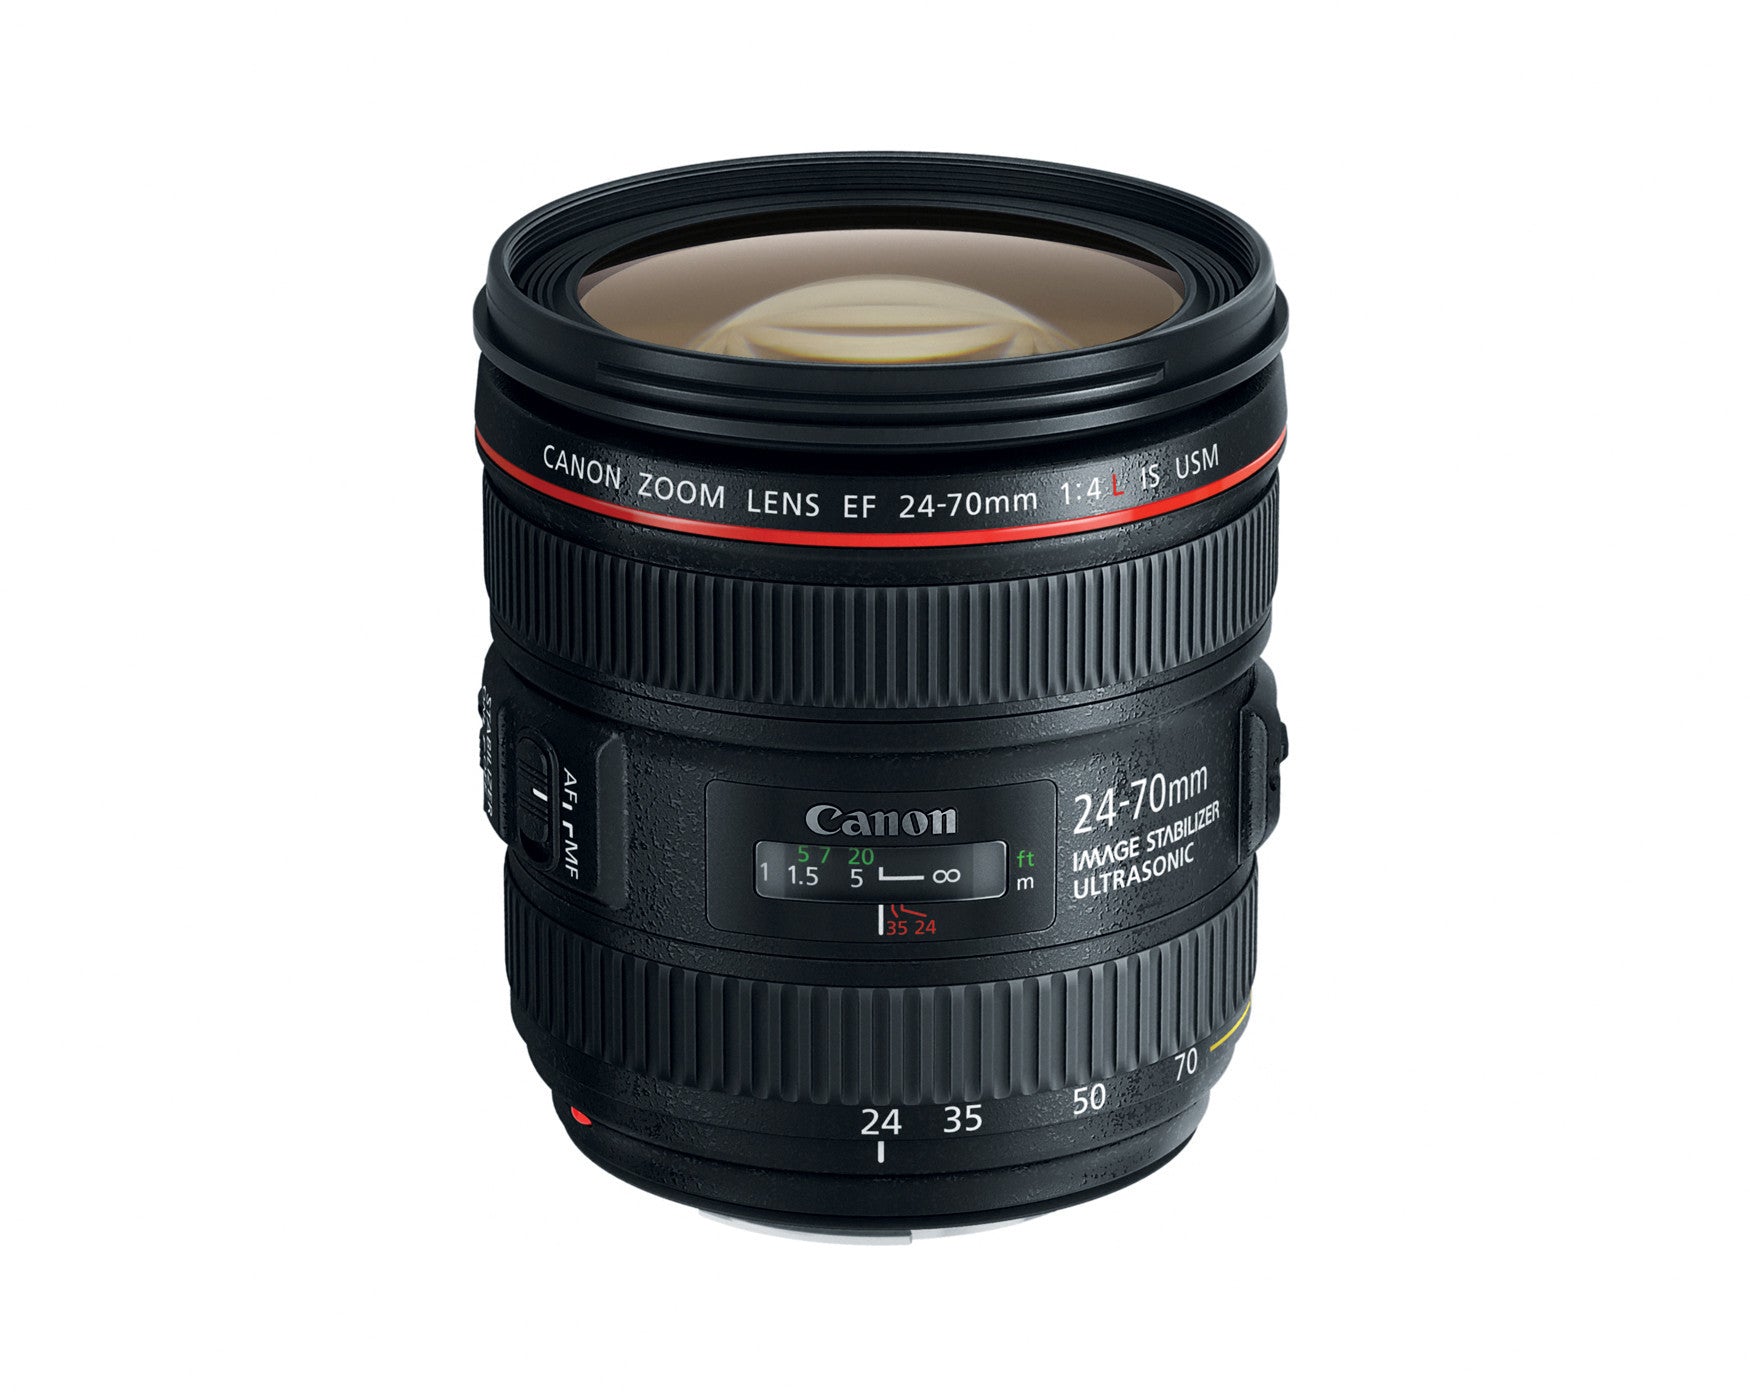 Canon EF 24-70mm f4L IS USM Lens, lenses slr lenses, Canon - Pictureline  - 2